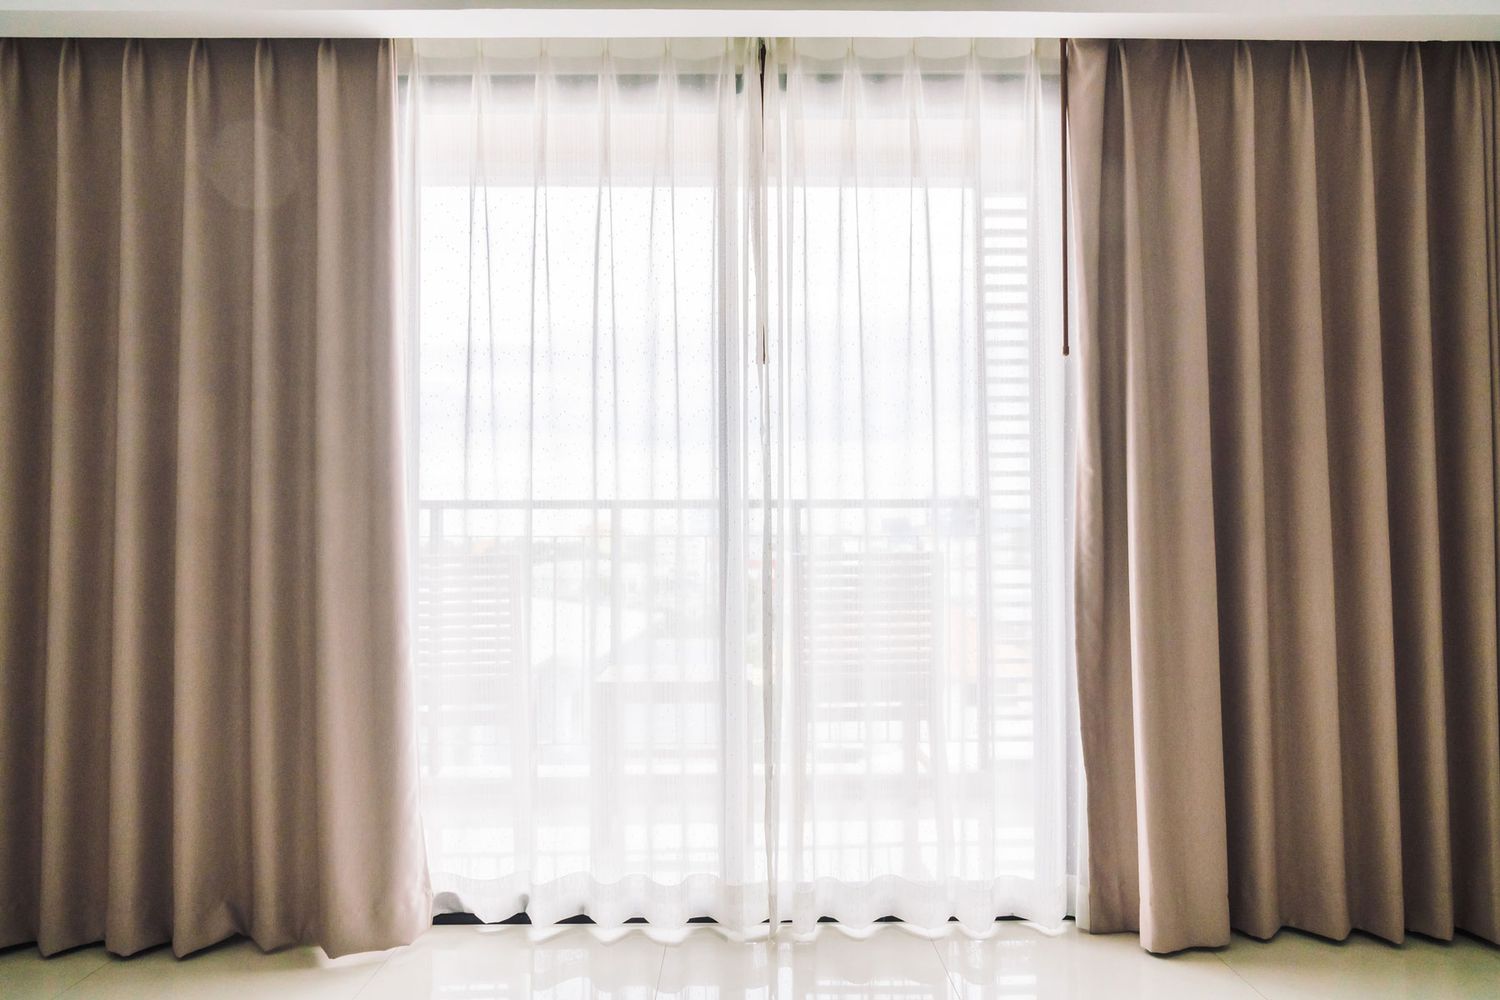 Do full length curtains look better?